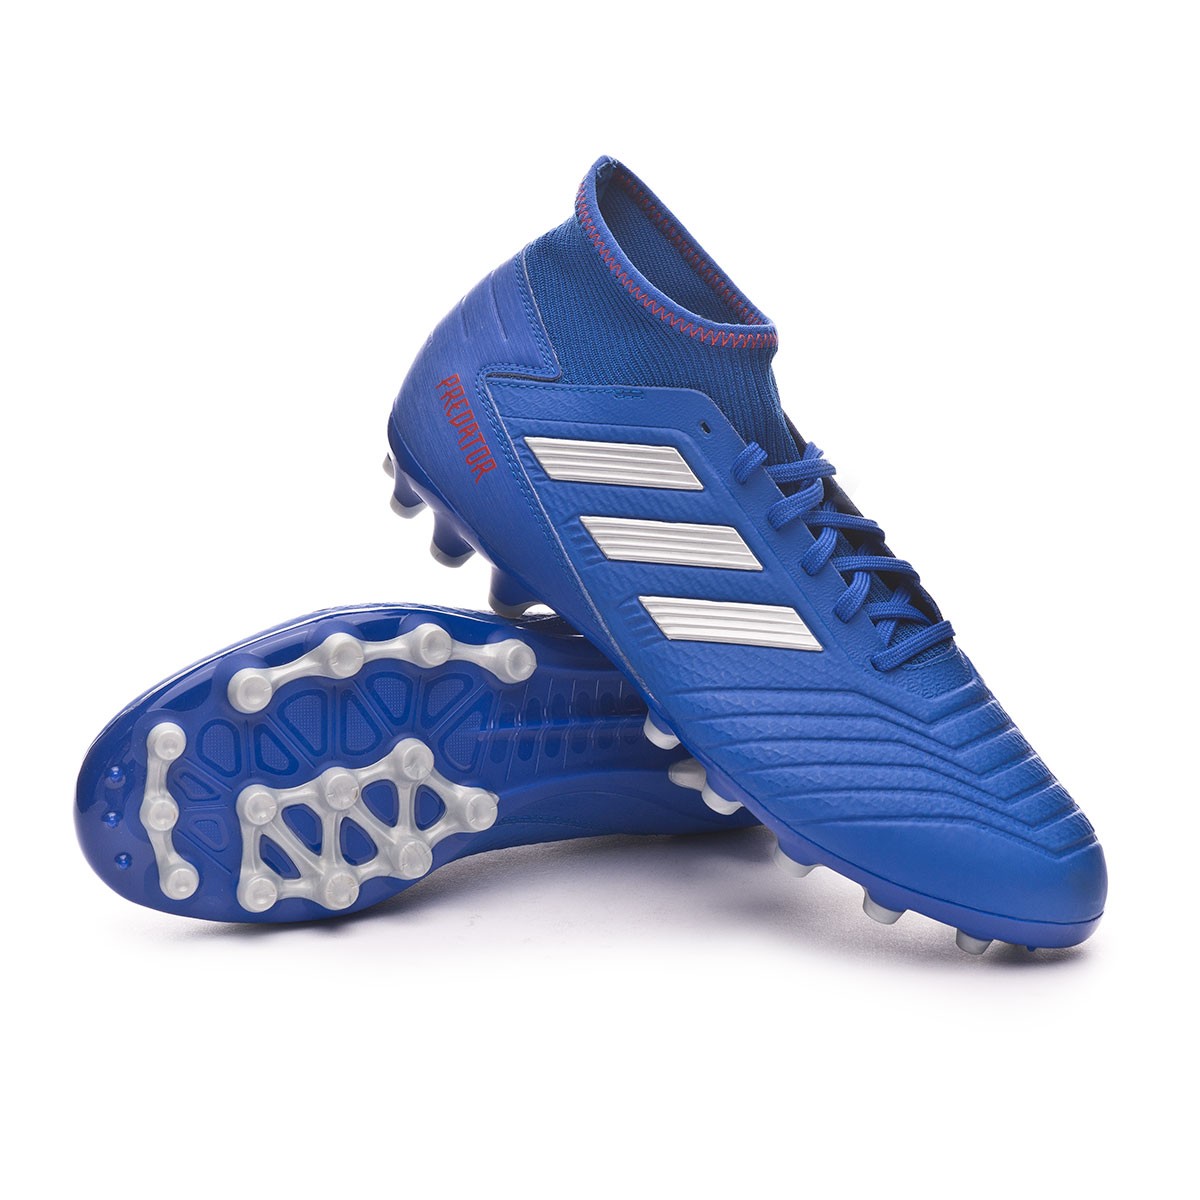 Football Boots adidas Predator 19.3 AG Bold blue-Silver metallic-Active red  - Football store Fútbol Emotion